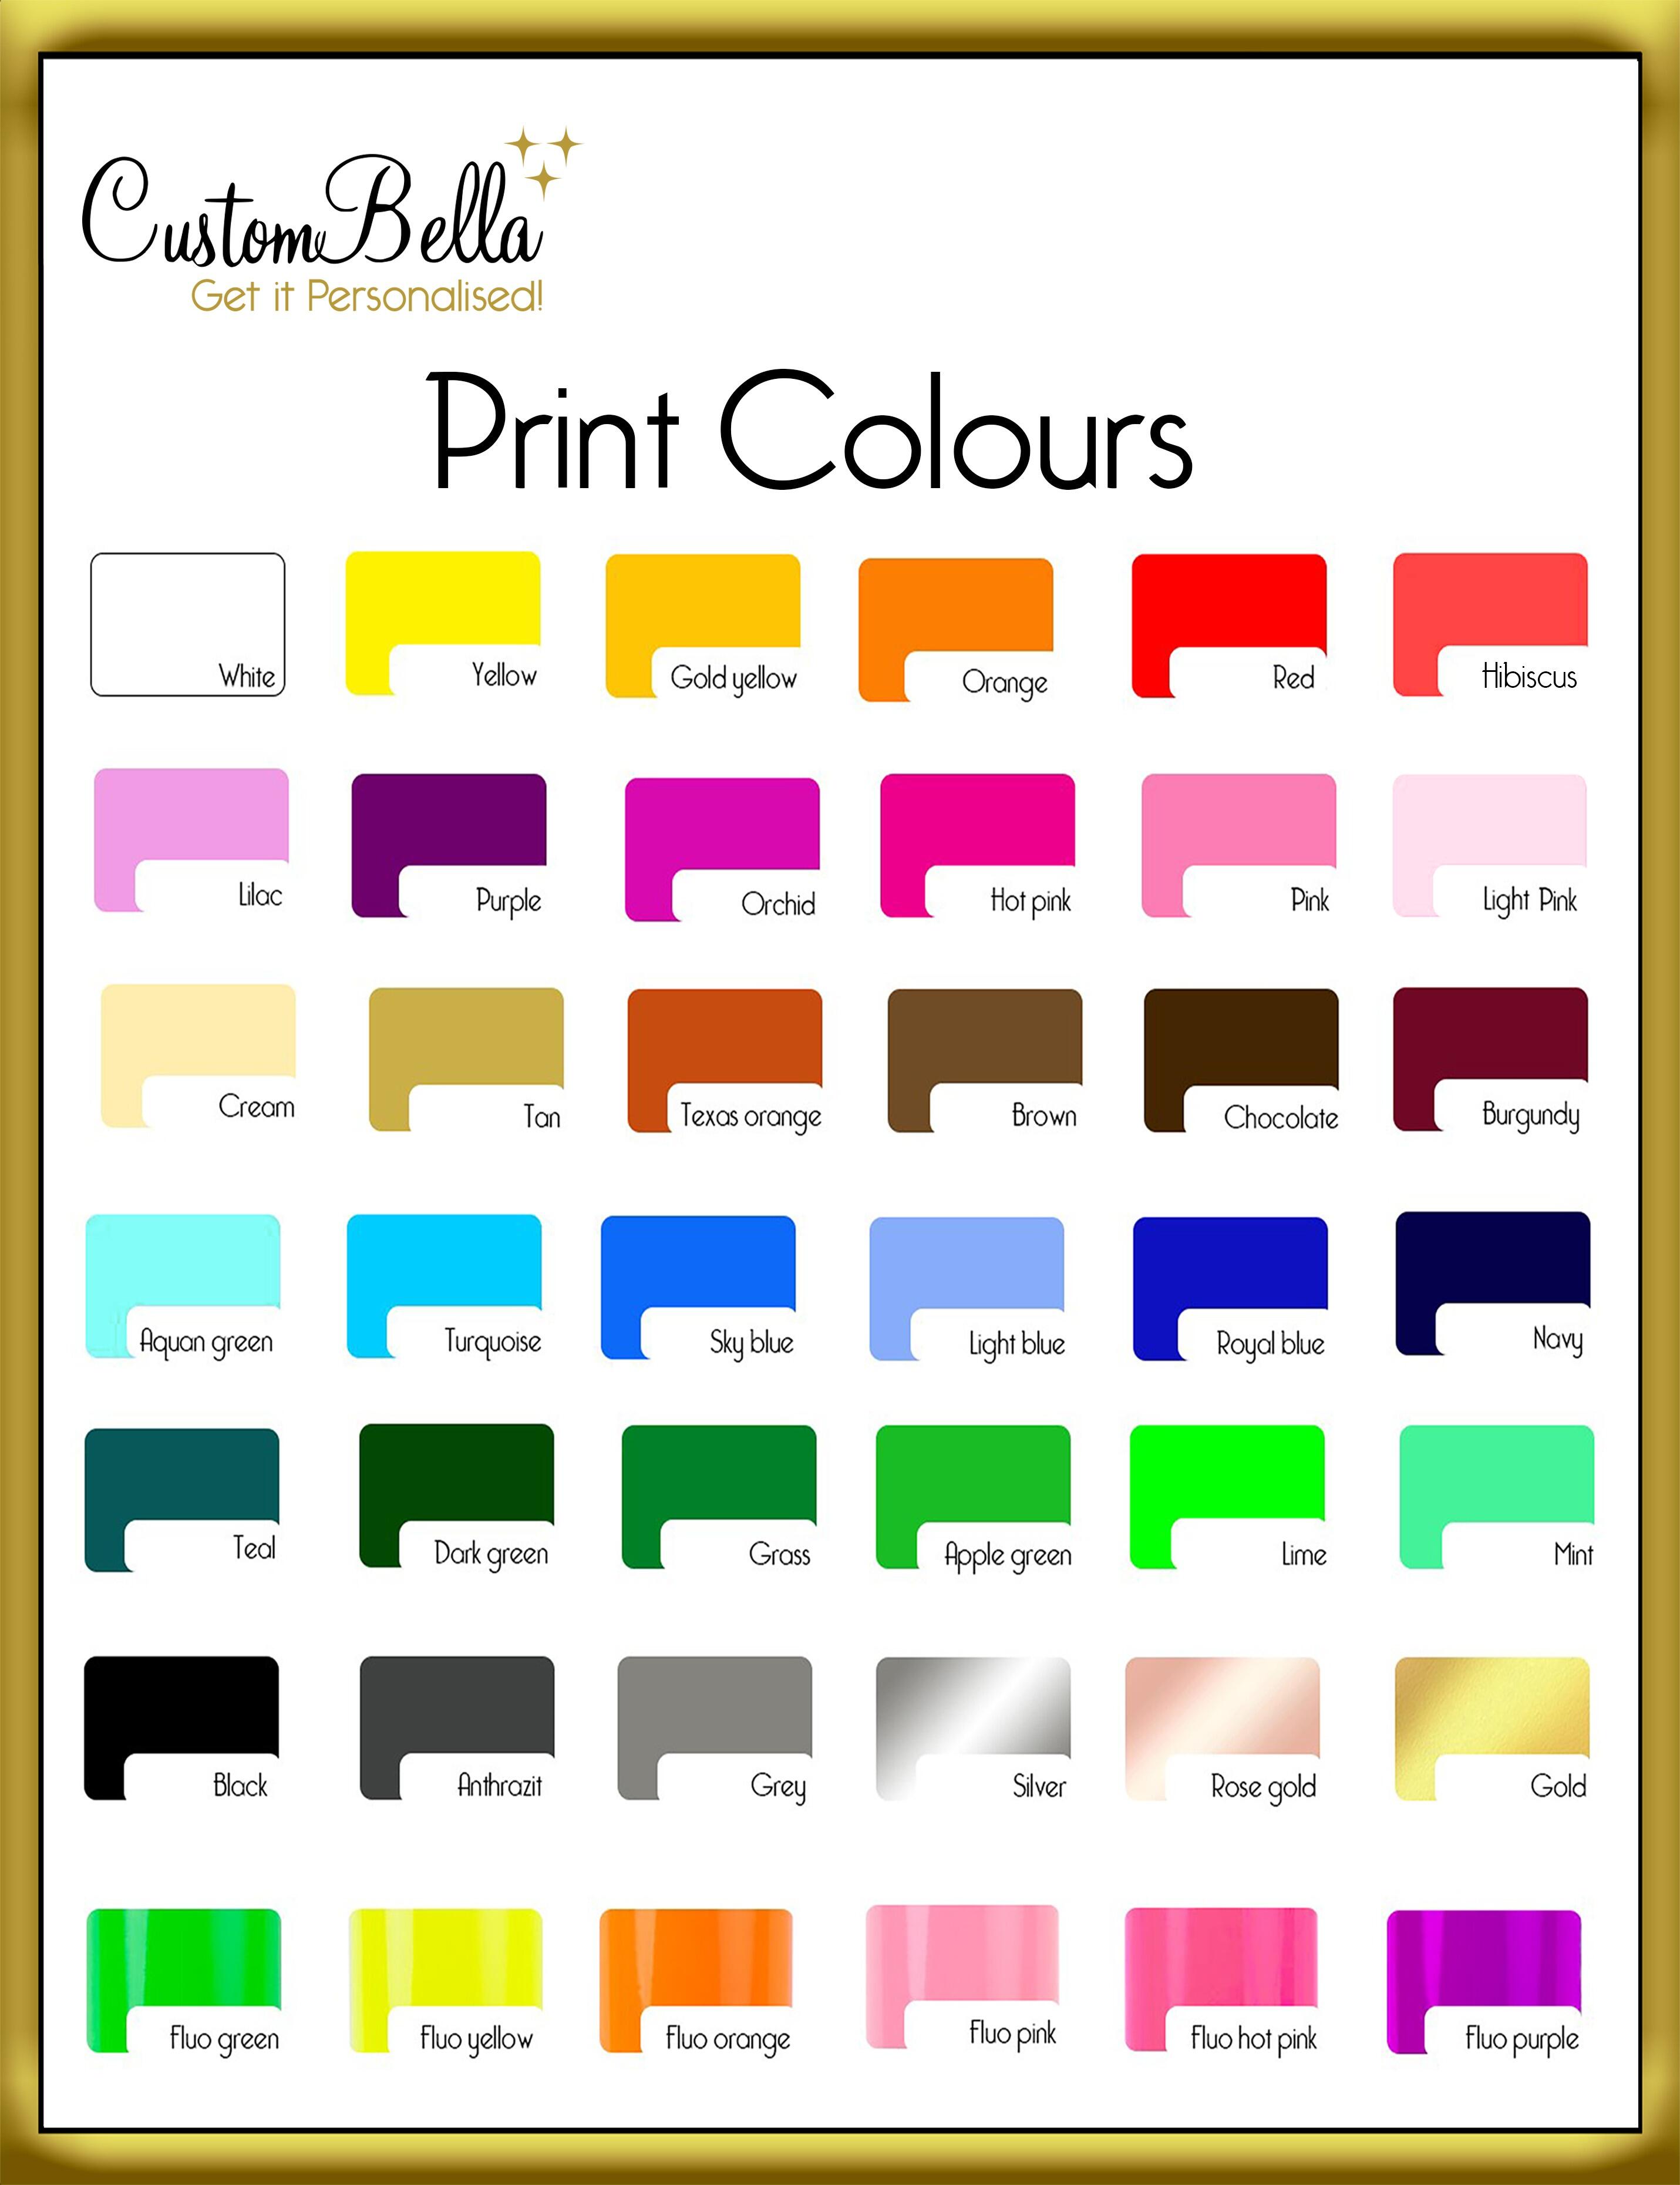 Custombella print colours